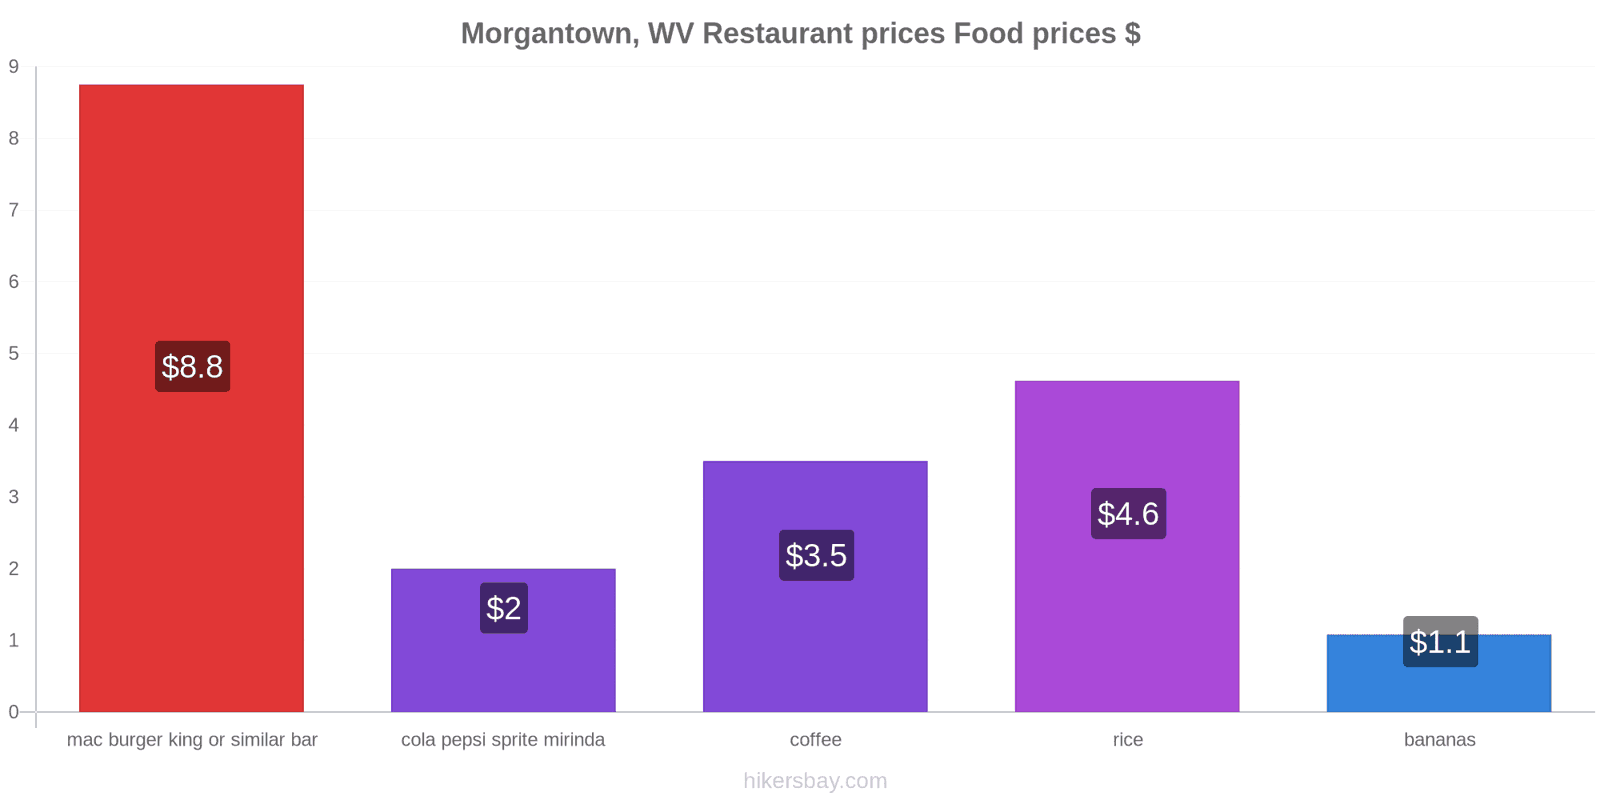 Morgantown, WV price changes hikersbay.com